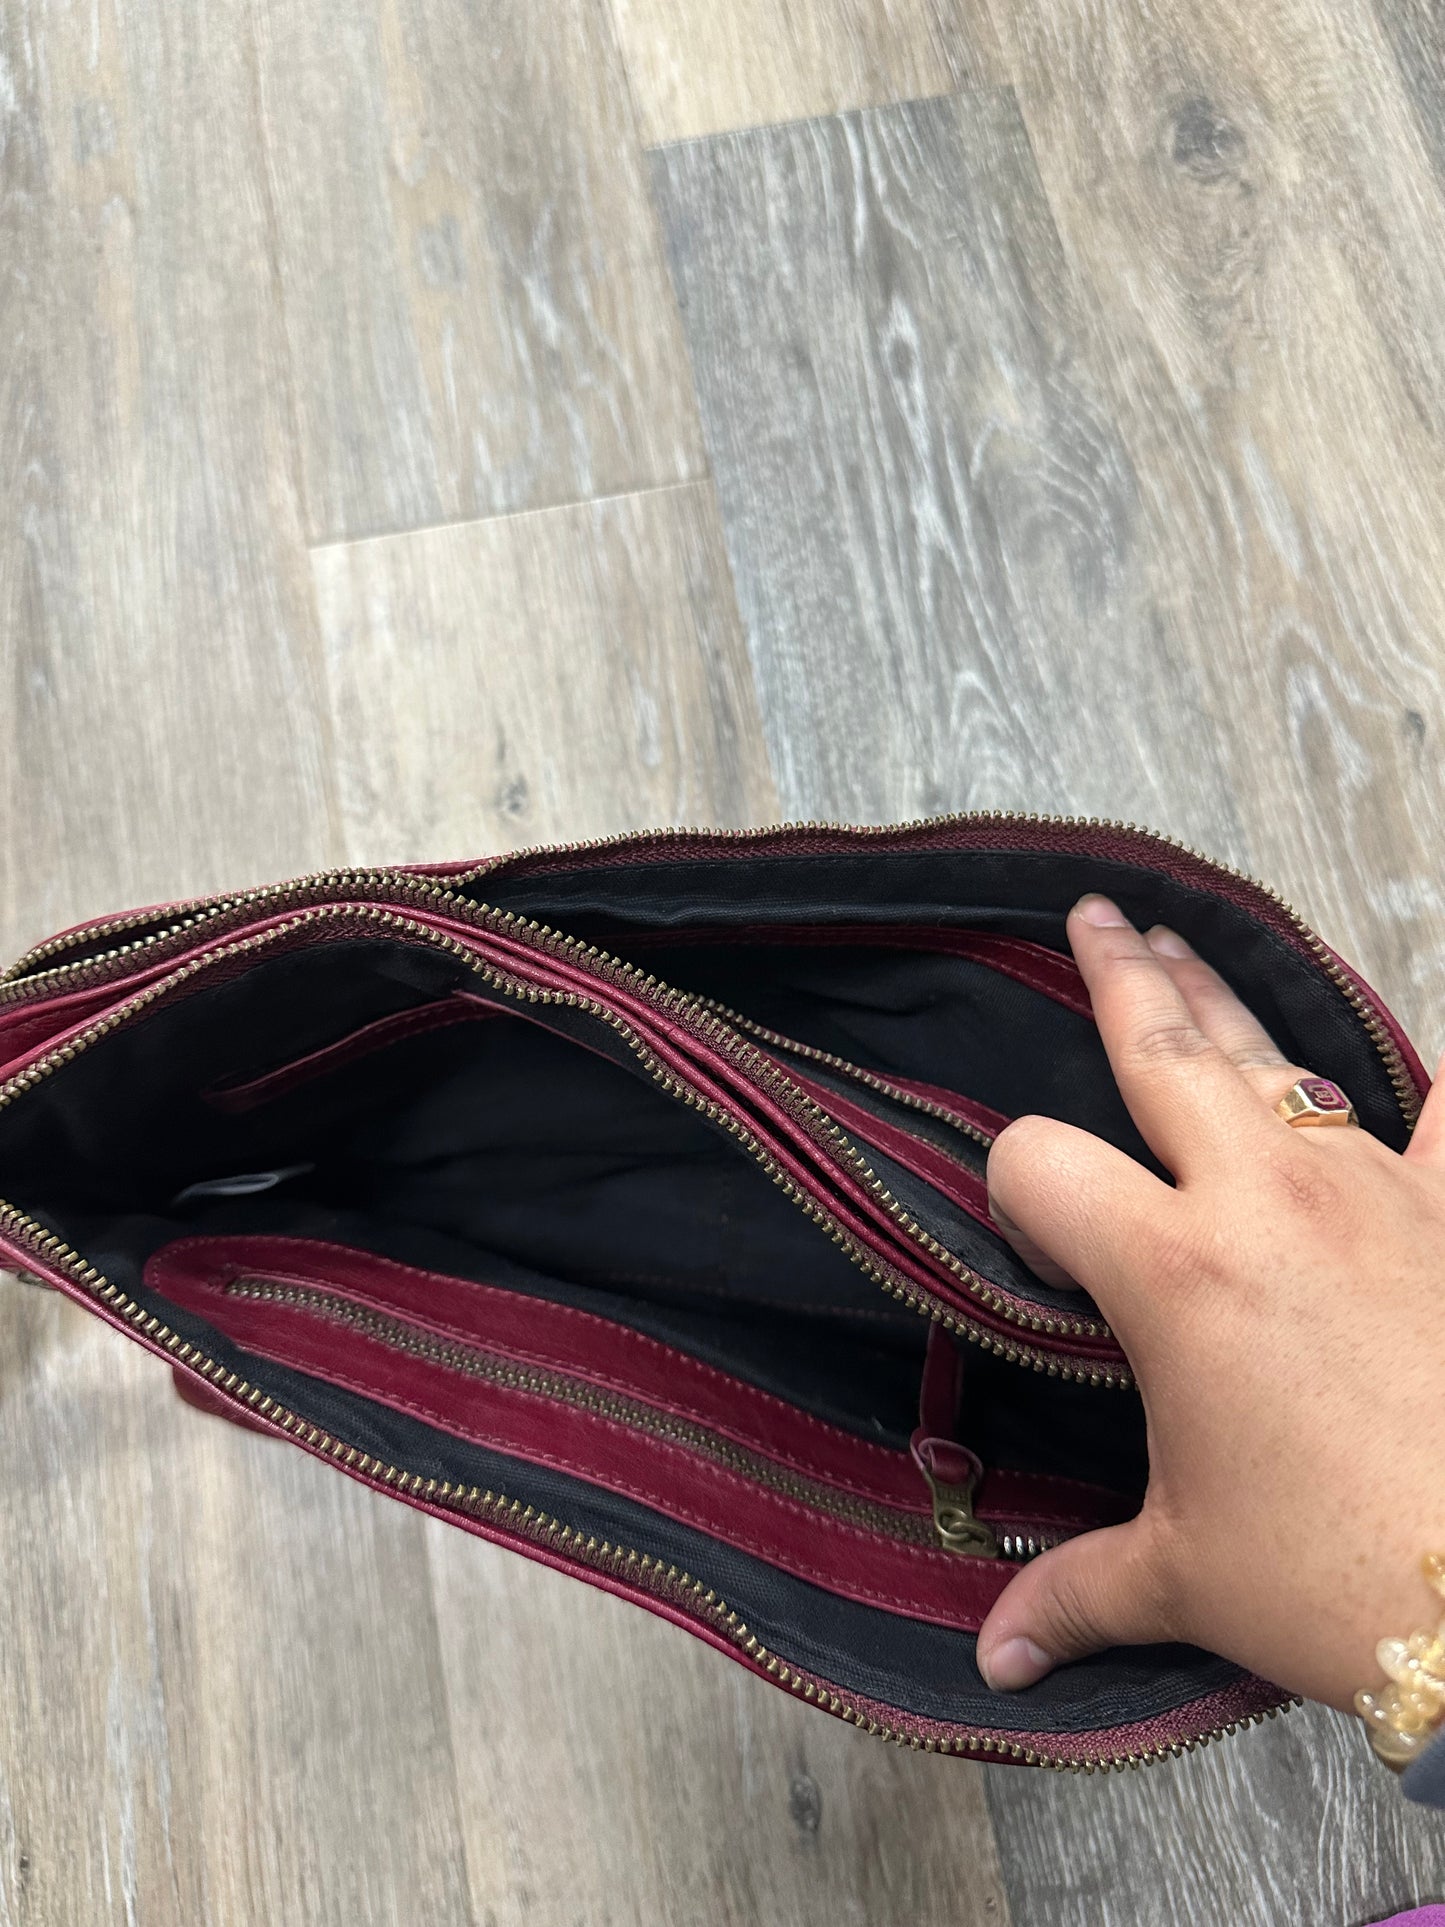 Handbag Leather By Wanderers  Size: Medium